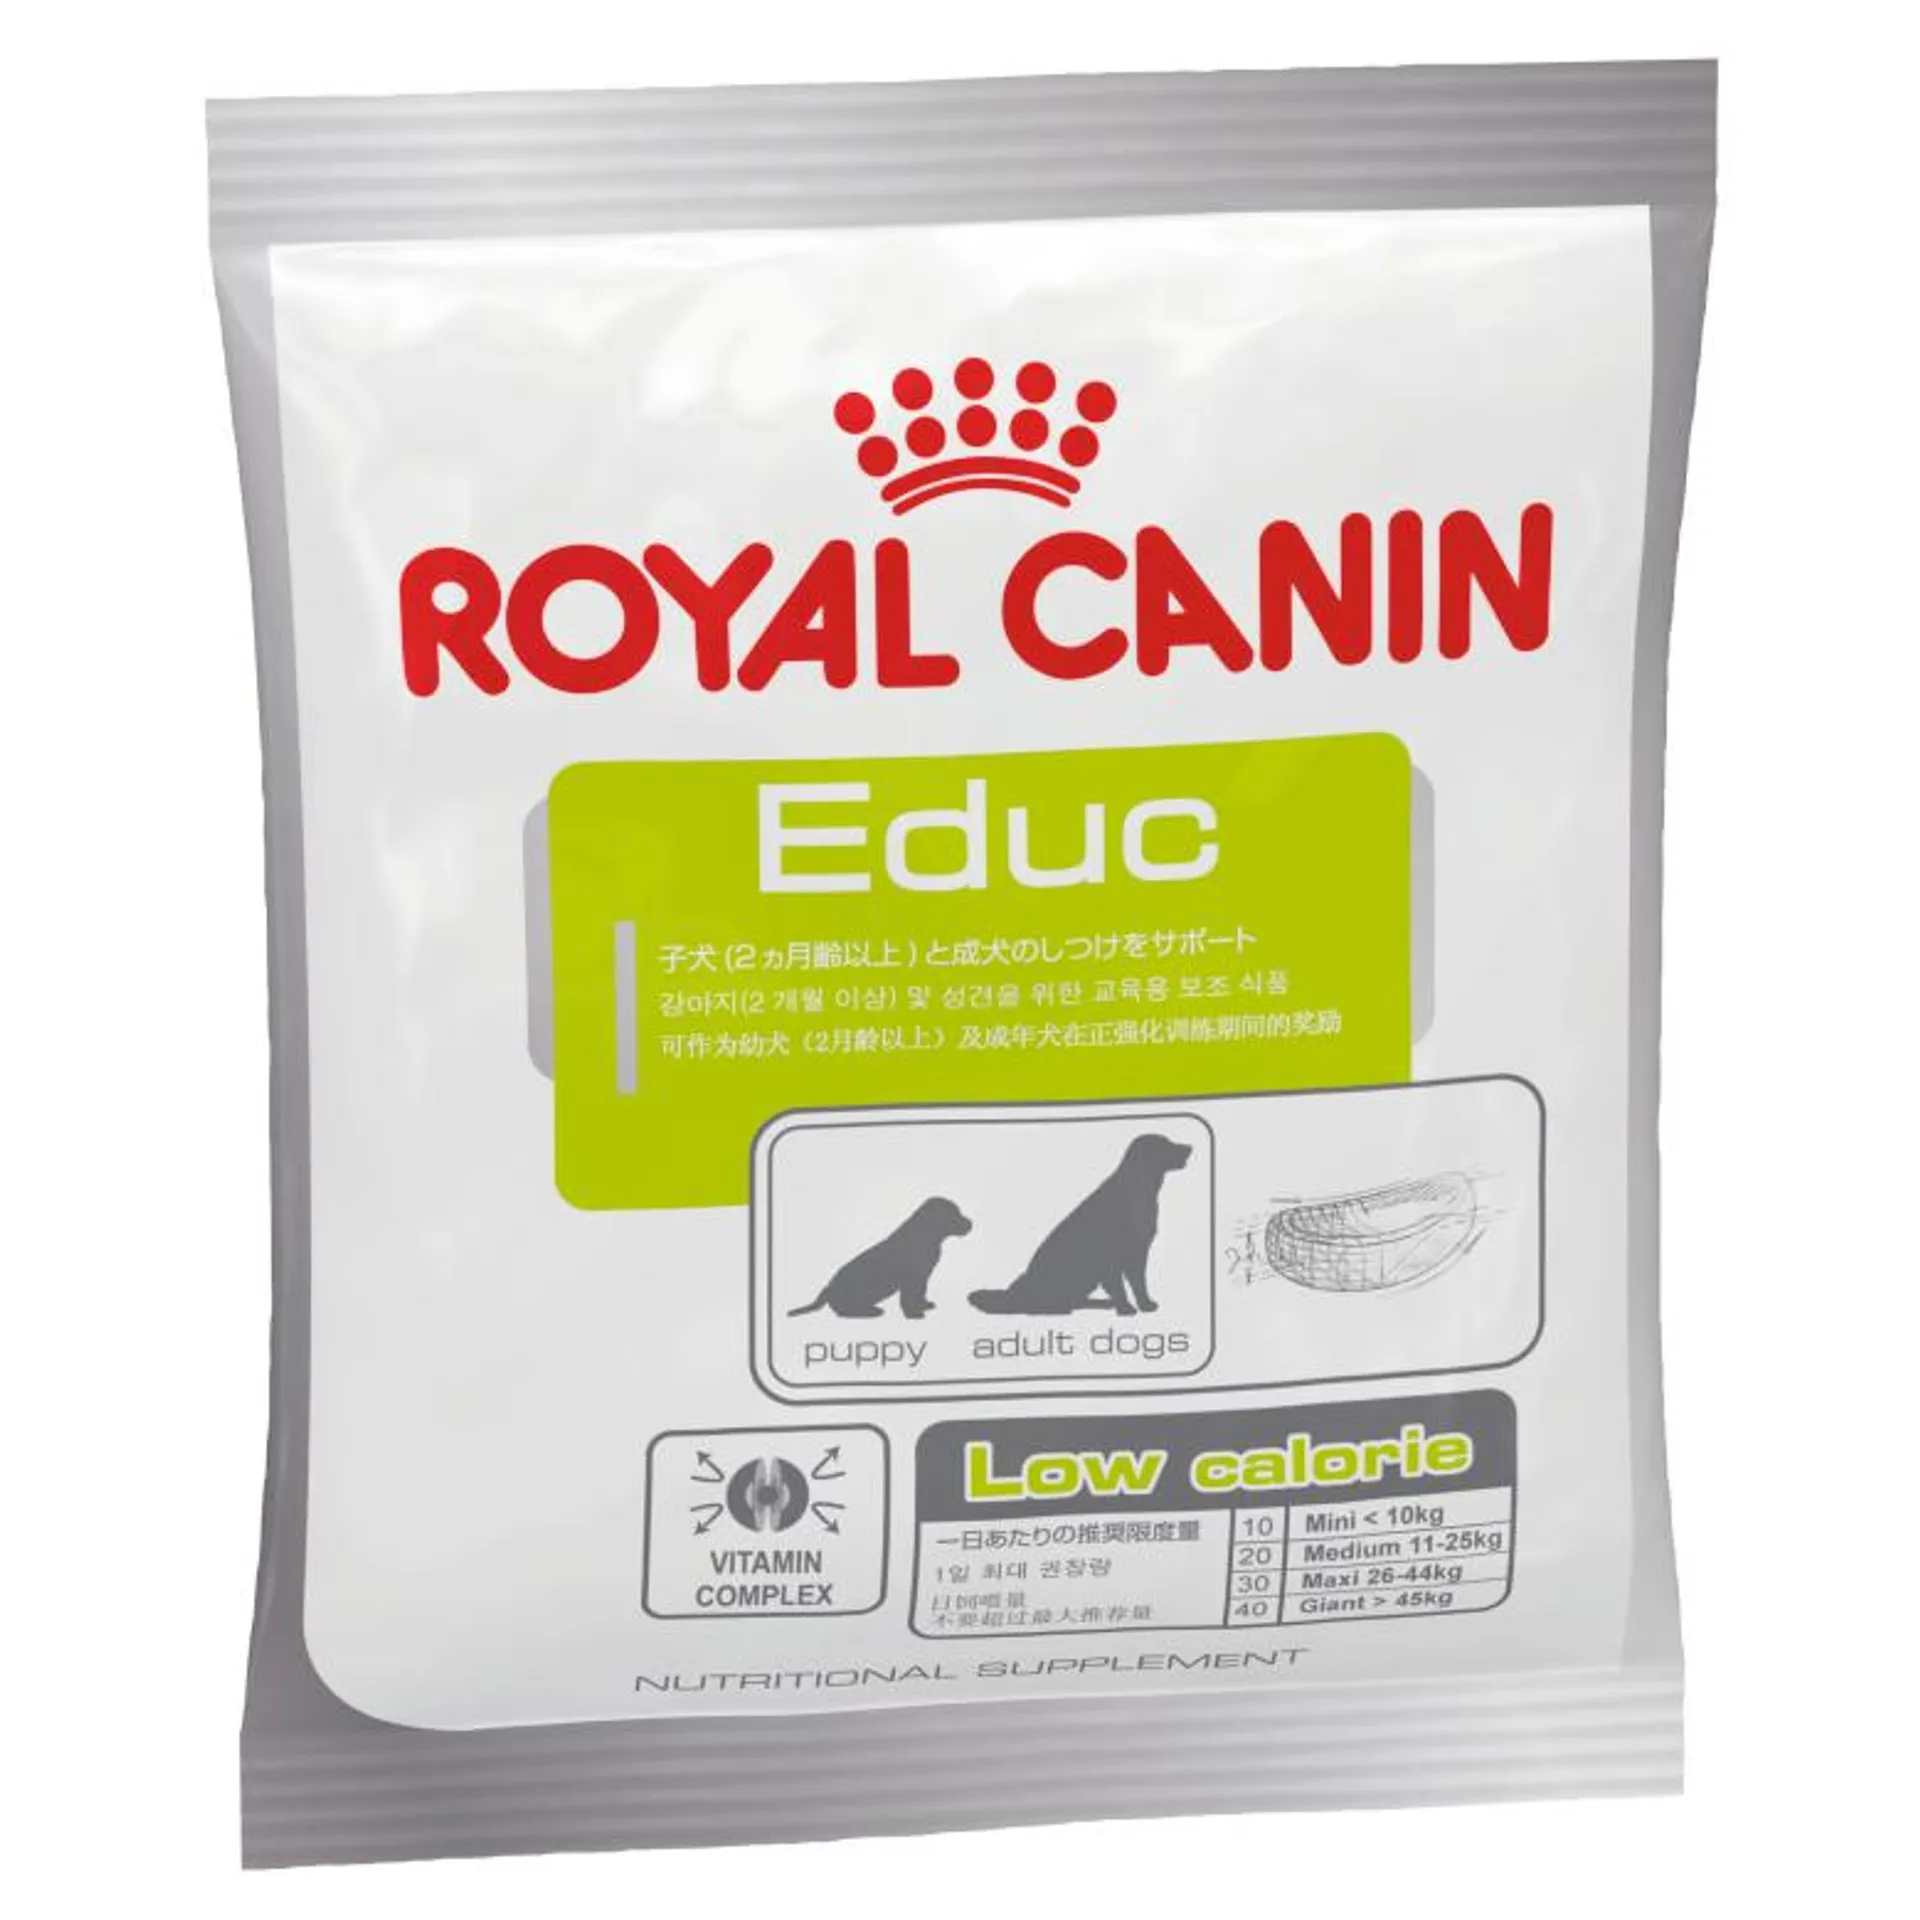 Royal Canin Educ Dog Training Treats